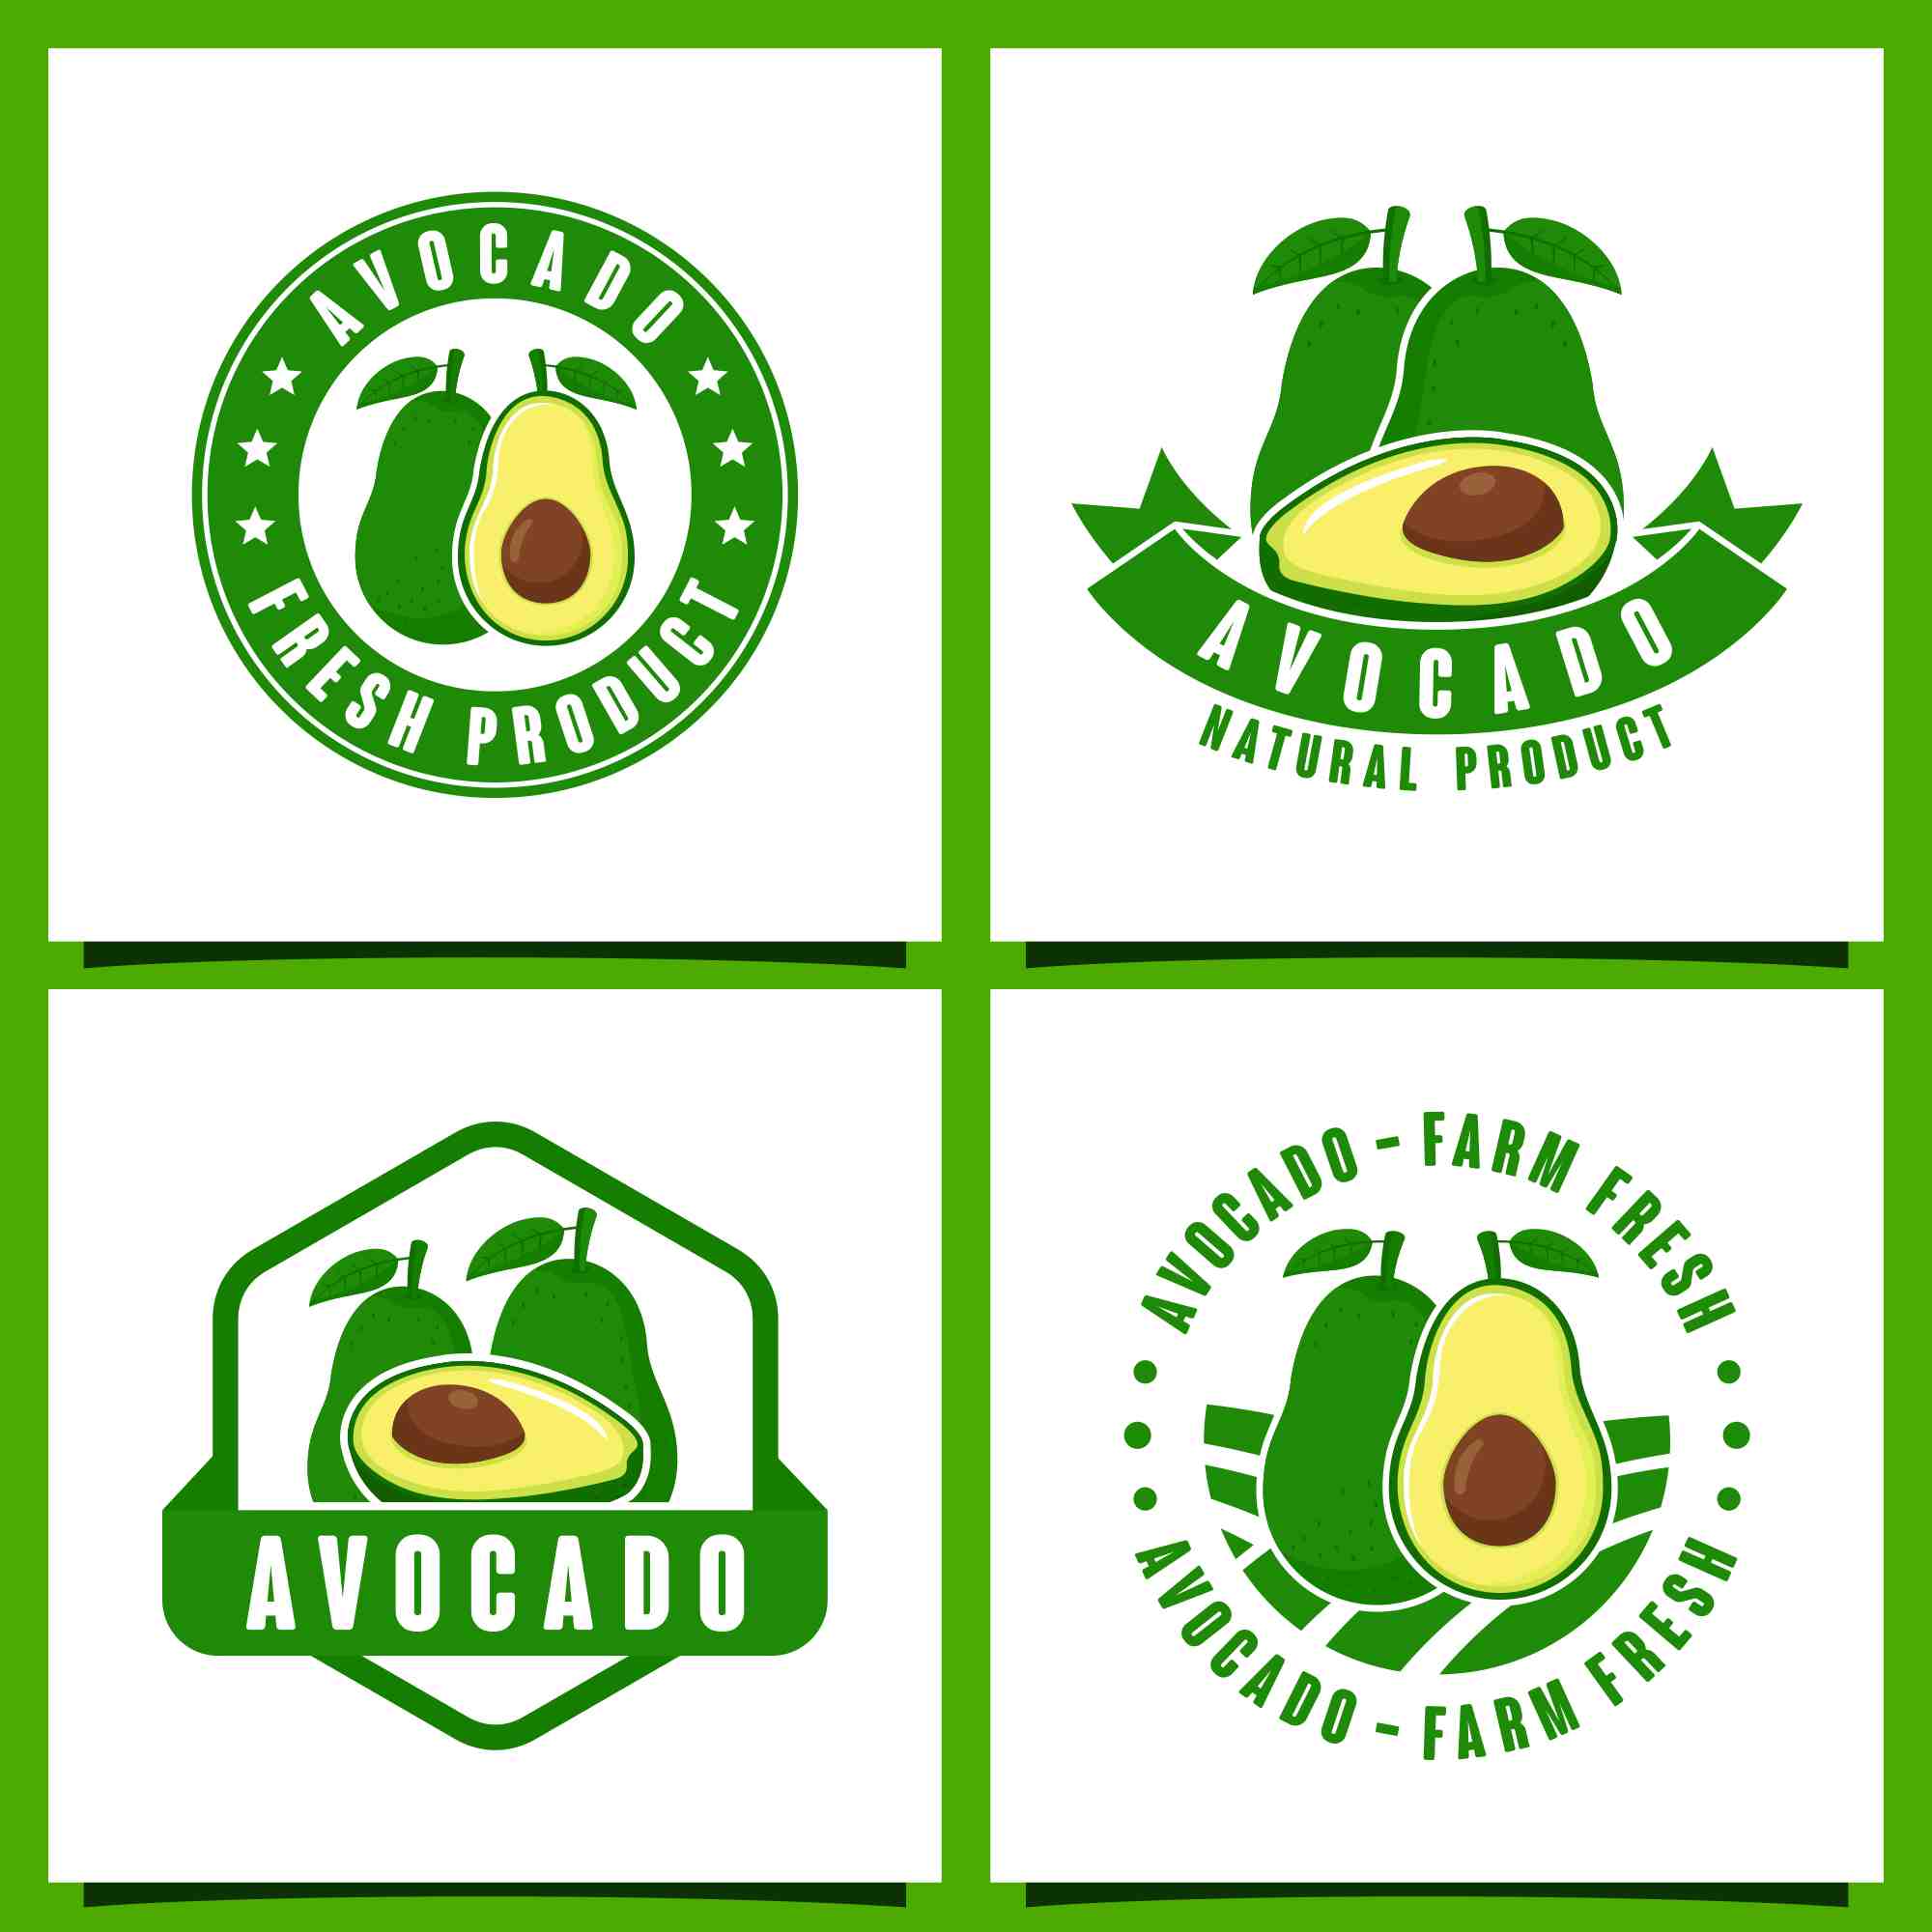 Set Avocado badge label design collection - $6 preview image.